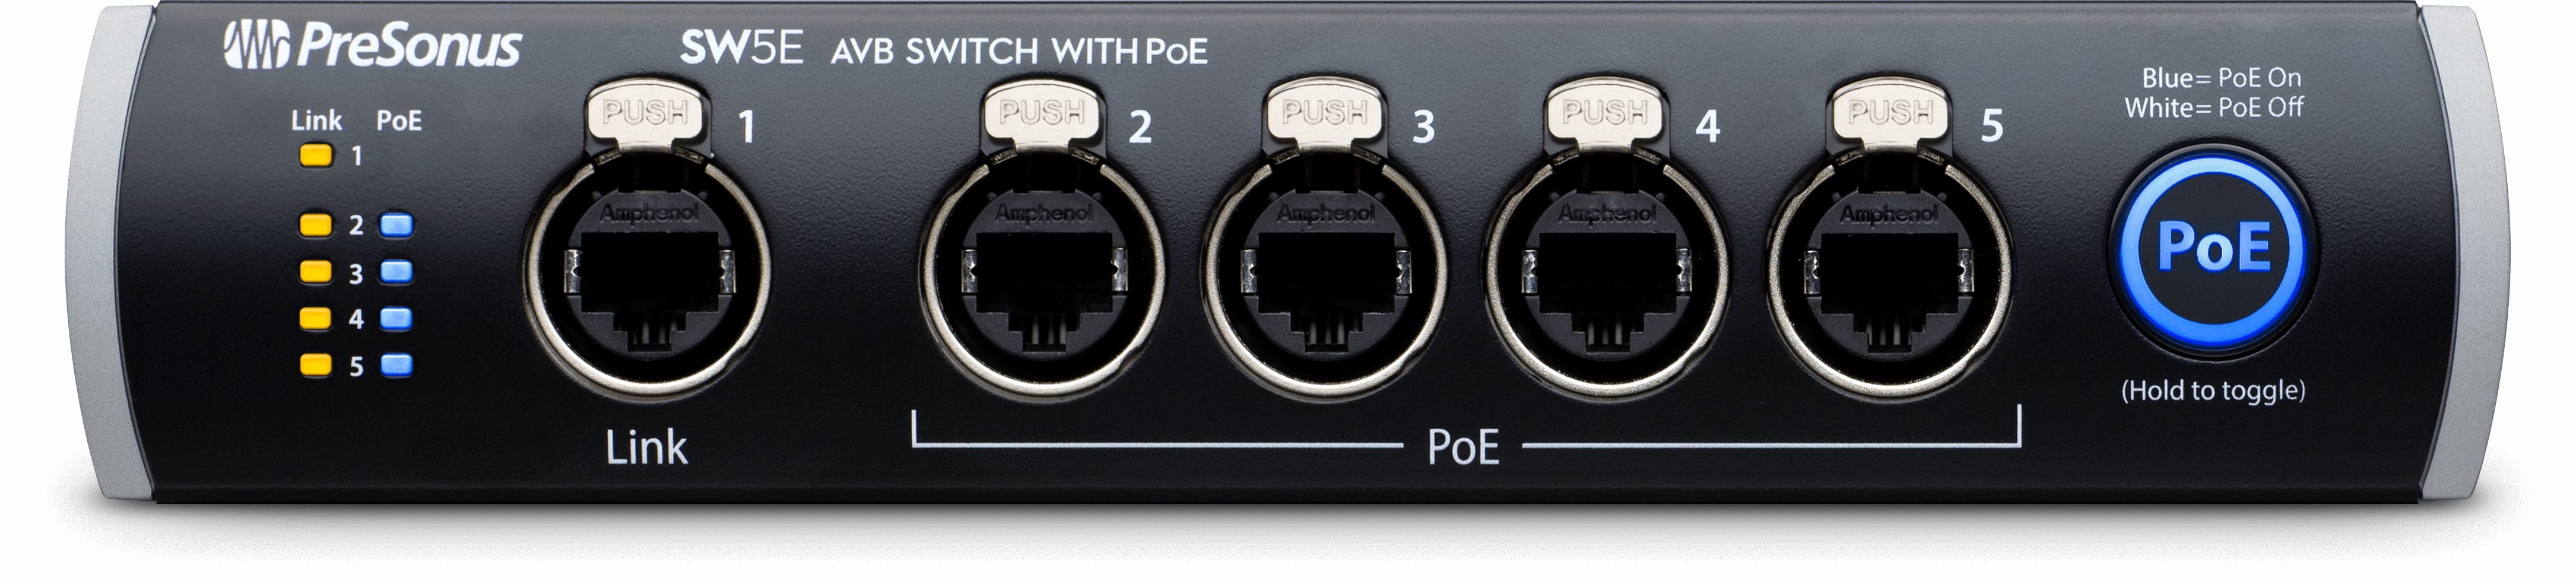 PreSonus SW5E 5-Port AVB Switch with PoE Front